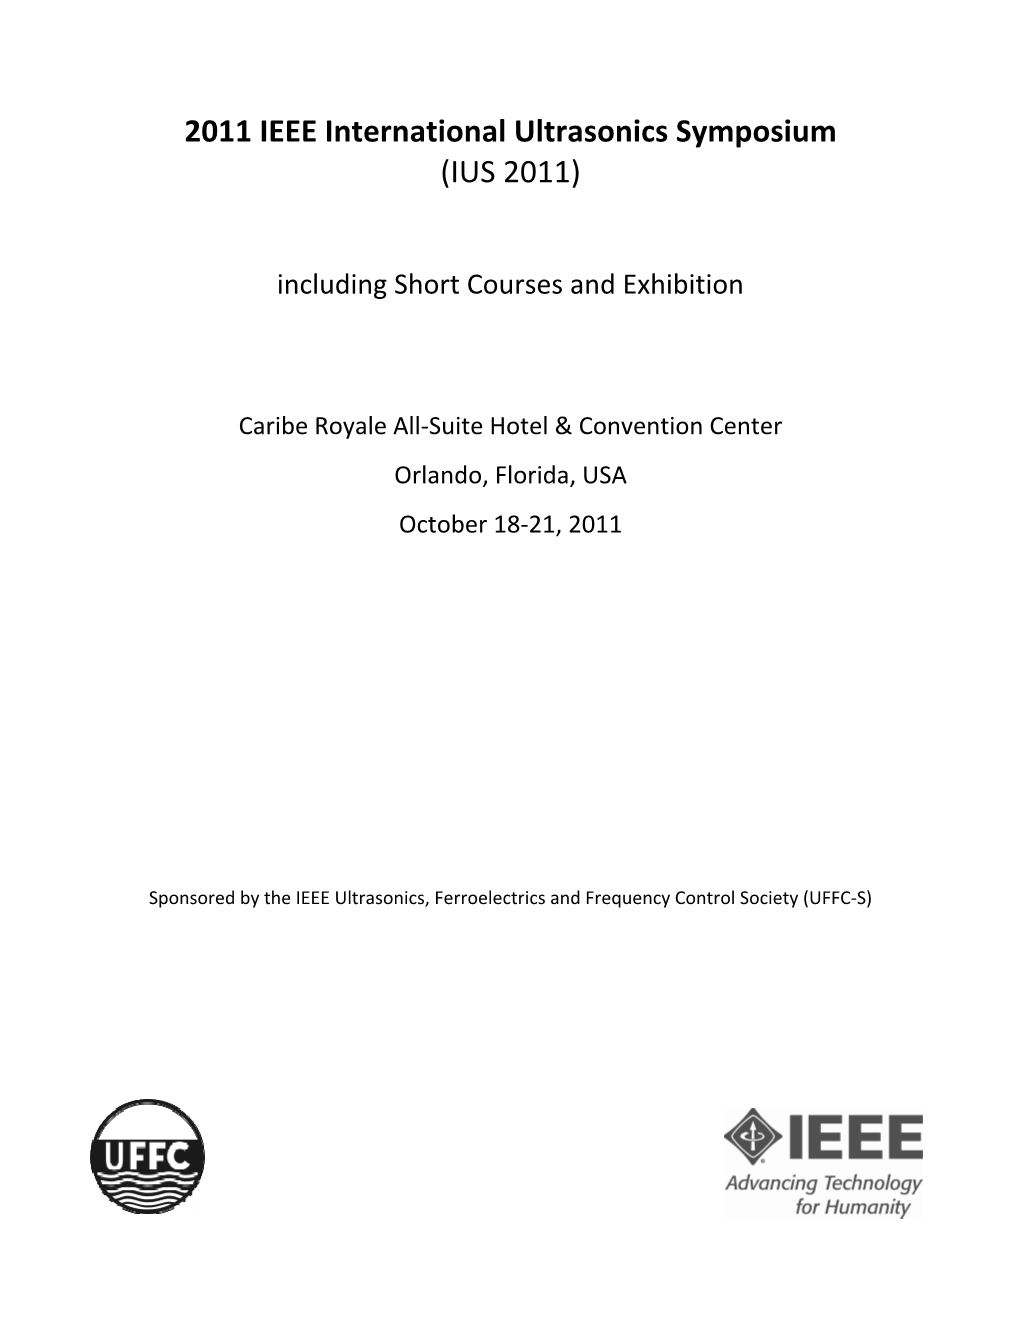 2011 IEEE International Ultrasonics Symposium (IUS 2011)